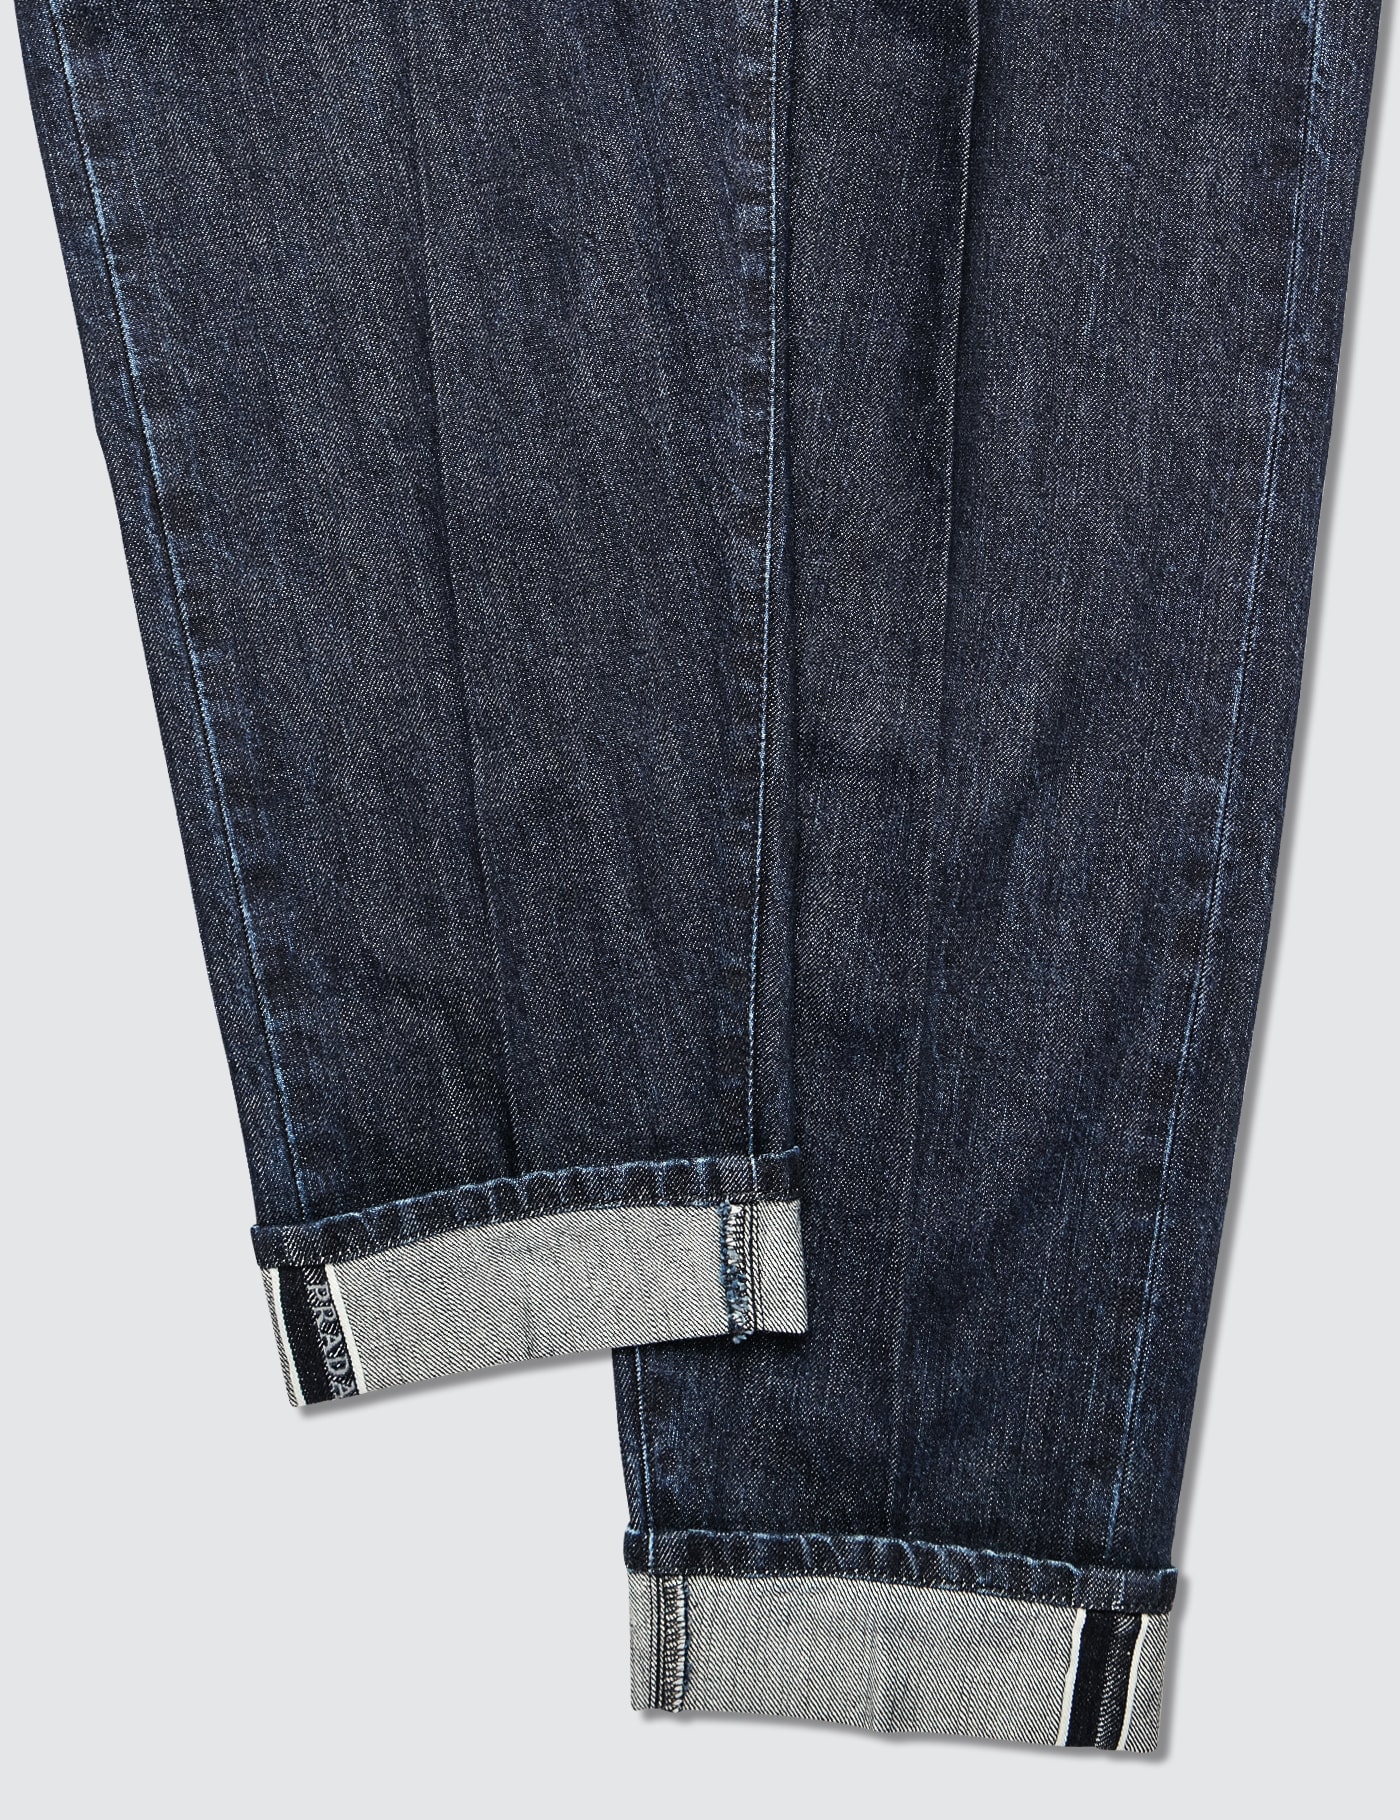 Prada - Selvage Prada Denim Dip & Dry Jeans | HBX